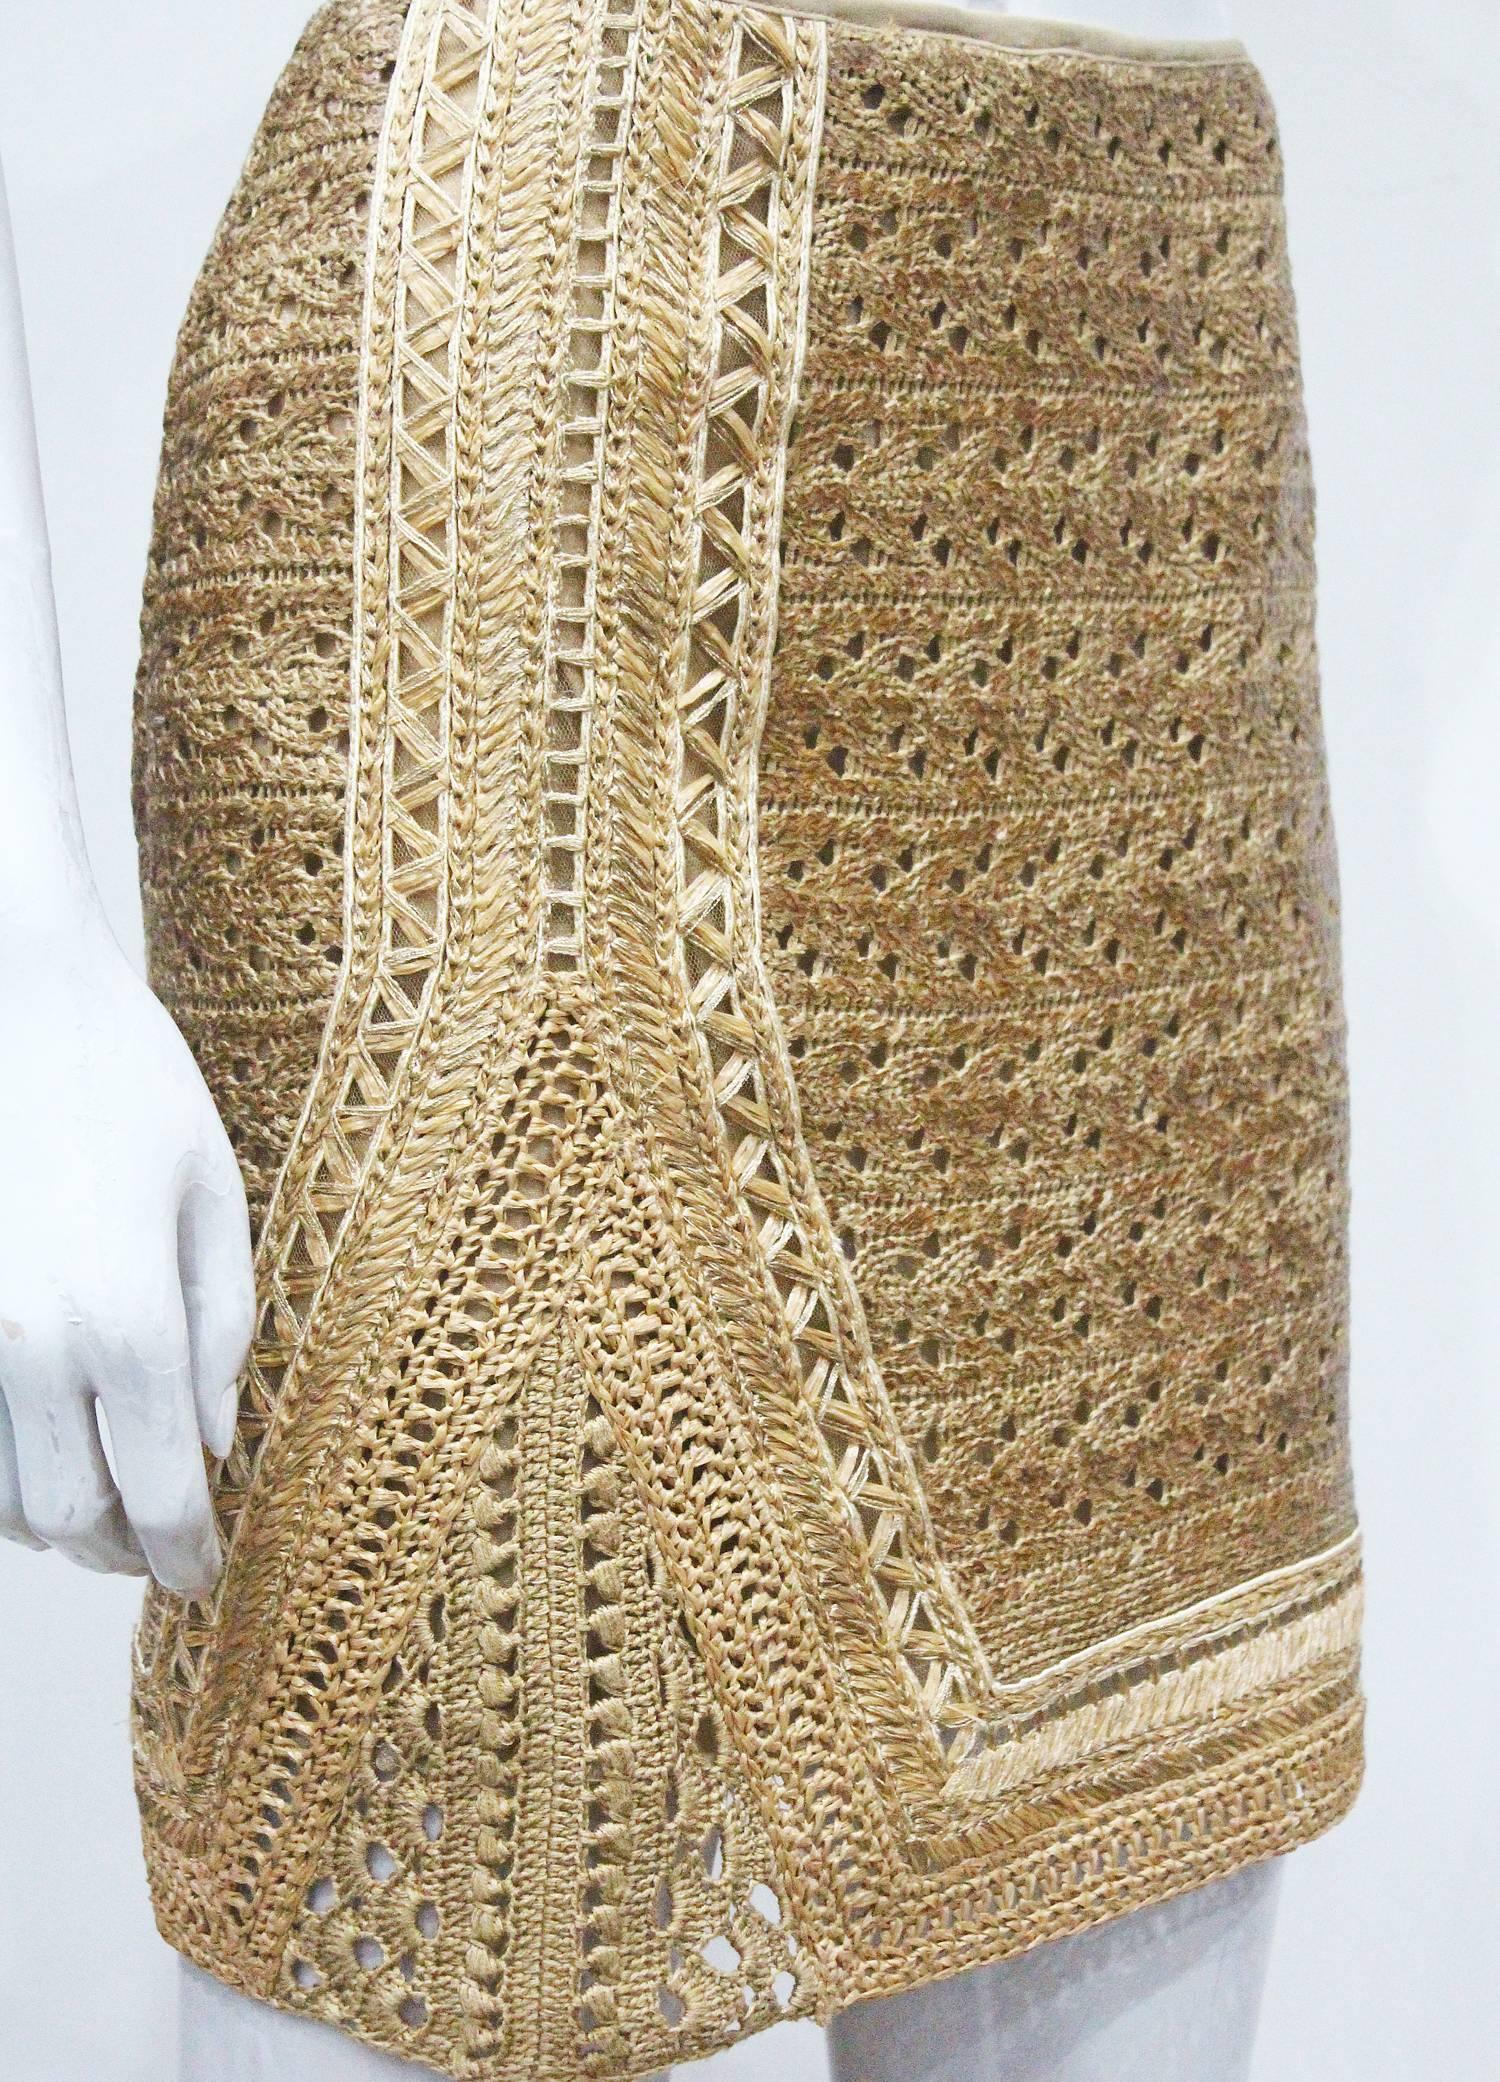 Women's Gianfranco Ferre raffia crochet skirt and bustier ensemble, c. 2001